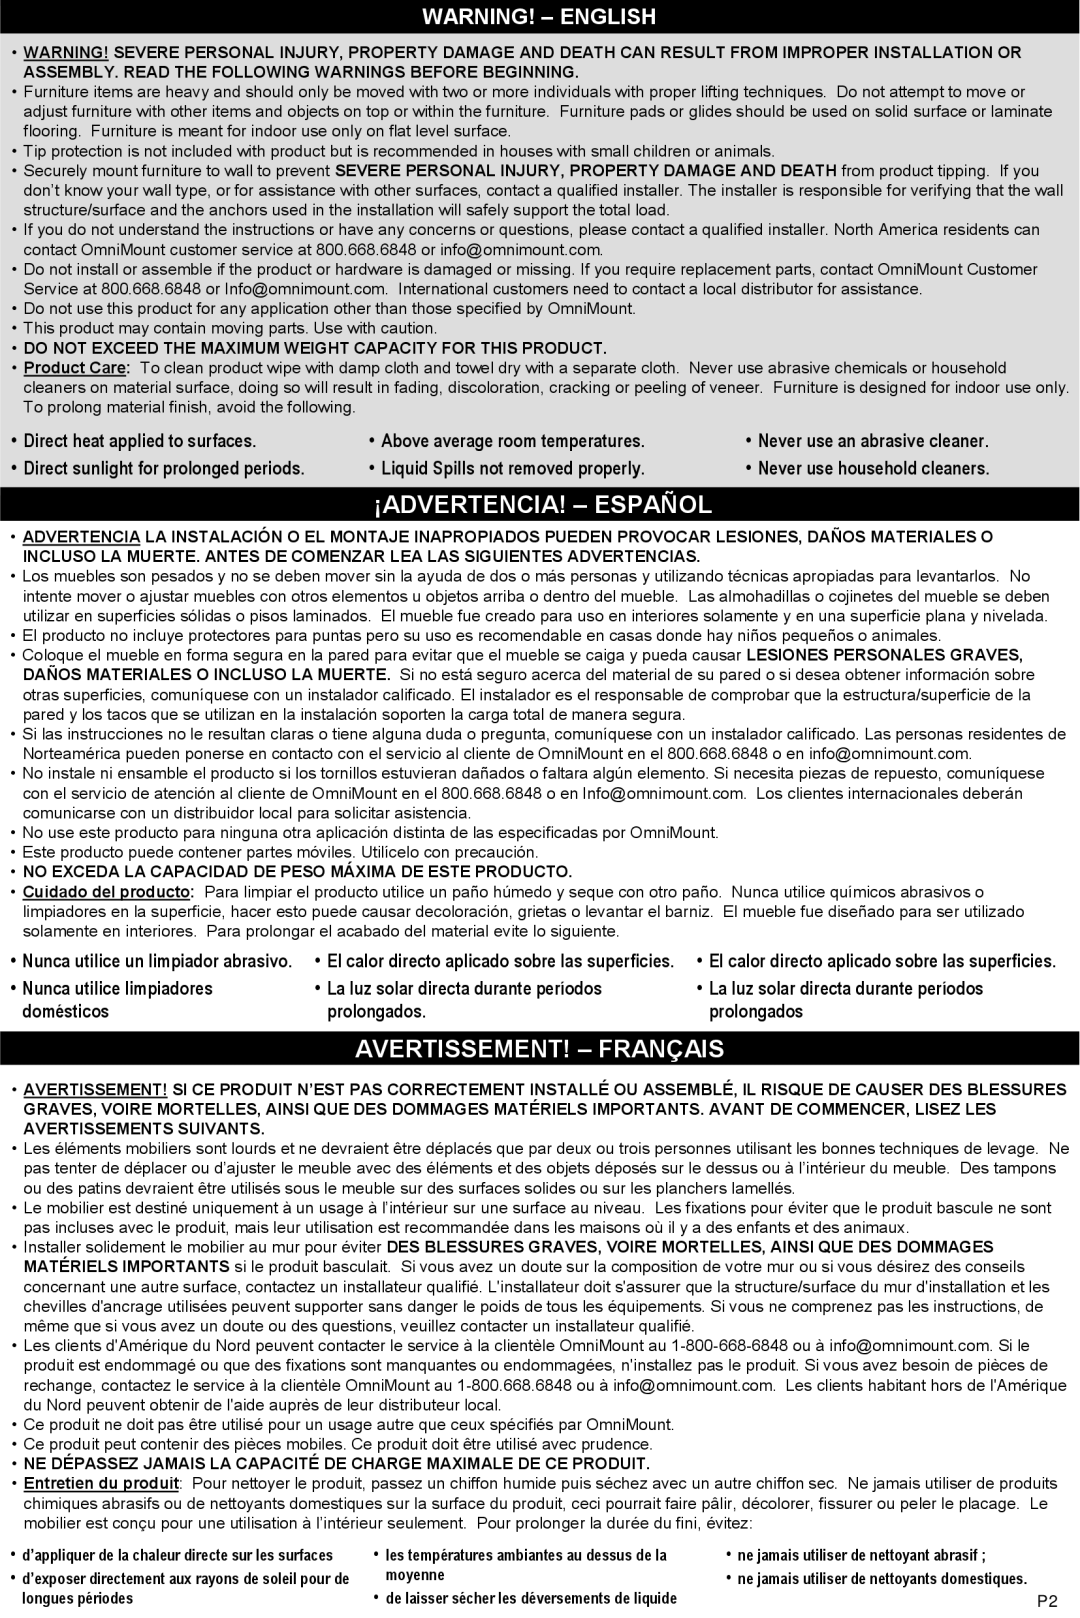 Omnimount LINK LT63, 1004264 instruction manual ¡Advertencia! - Español, Avertissement! - Français, Warning! - English 